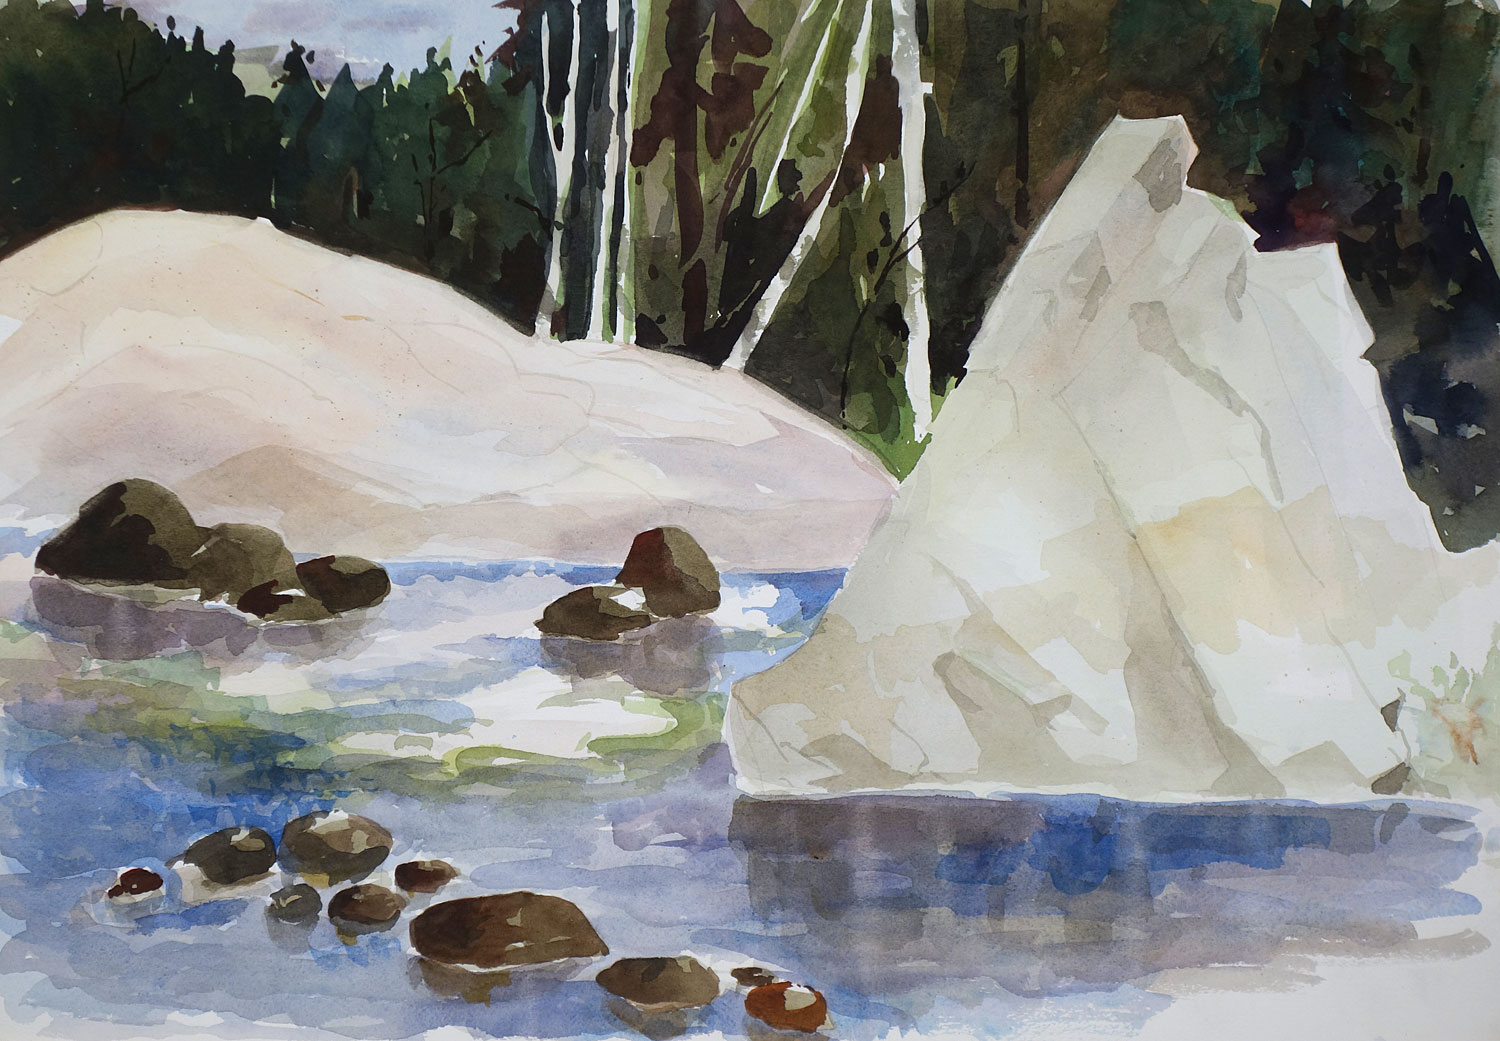 Adirondack Rocks, Mario Cooper Workshop 1988